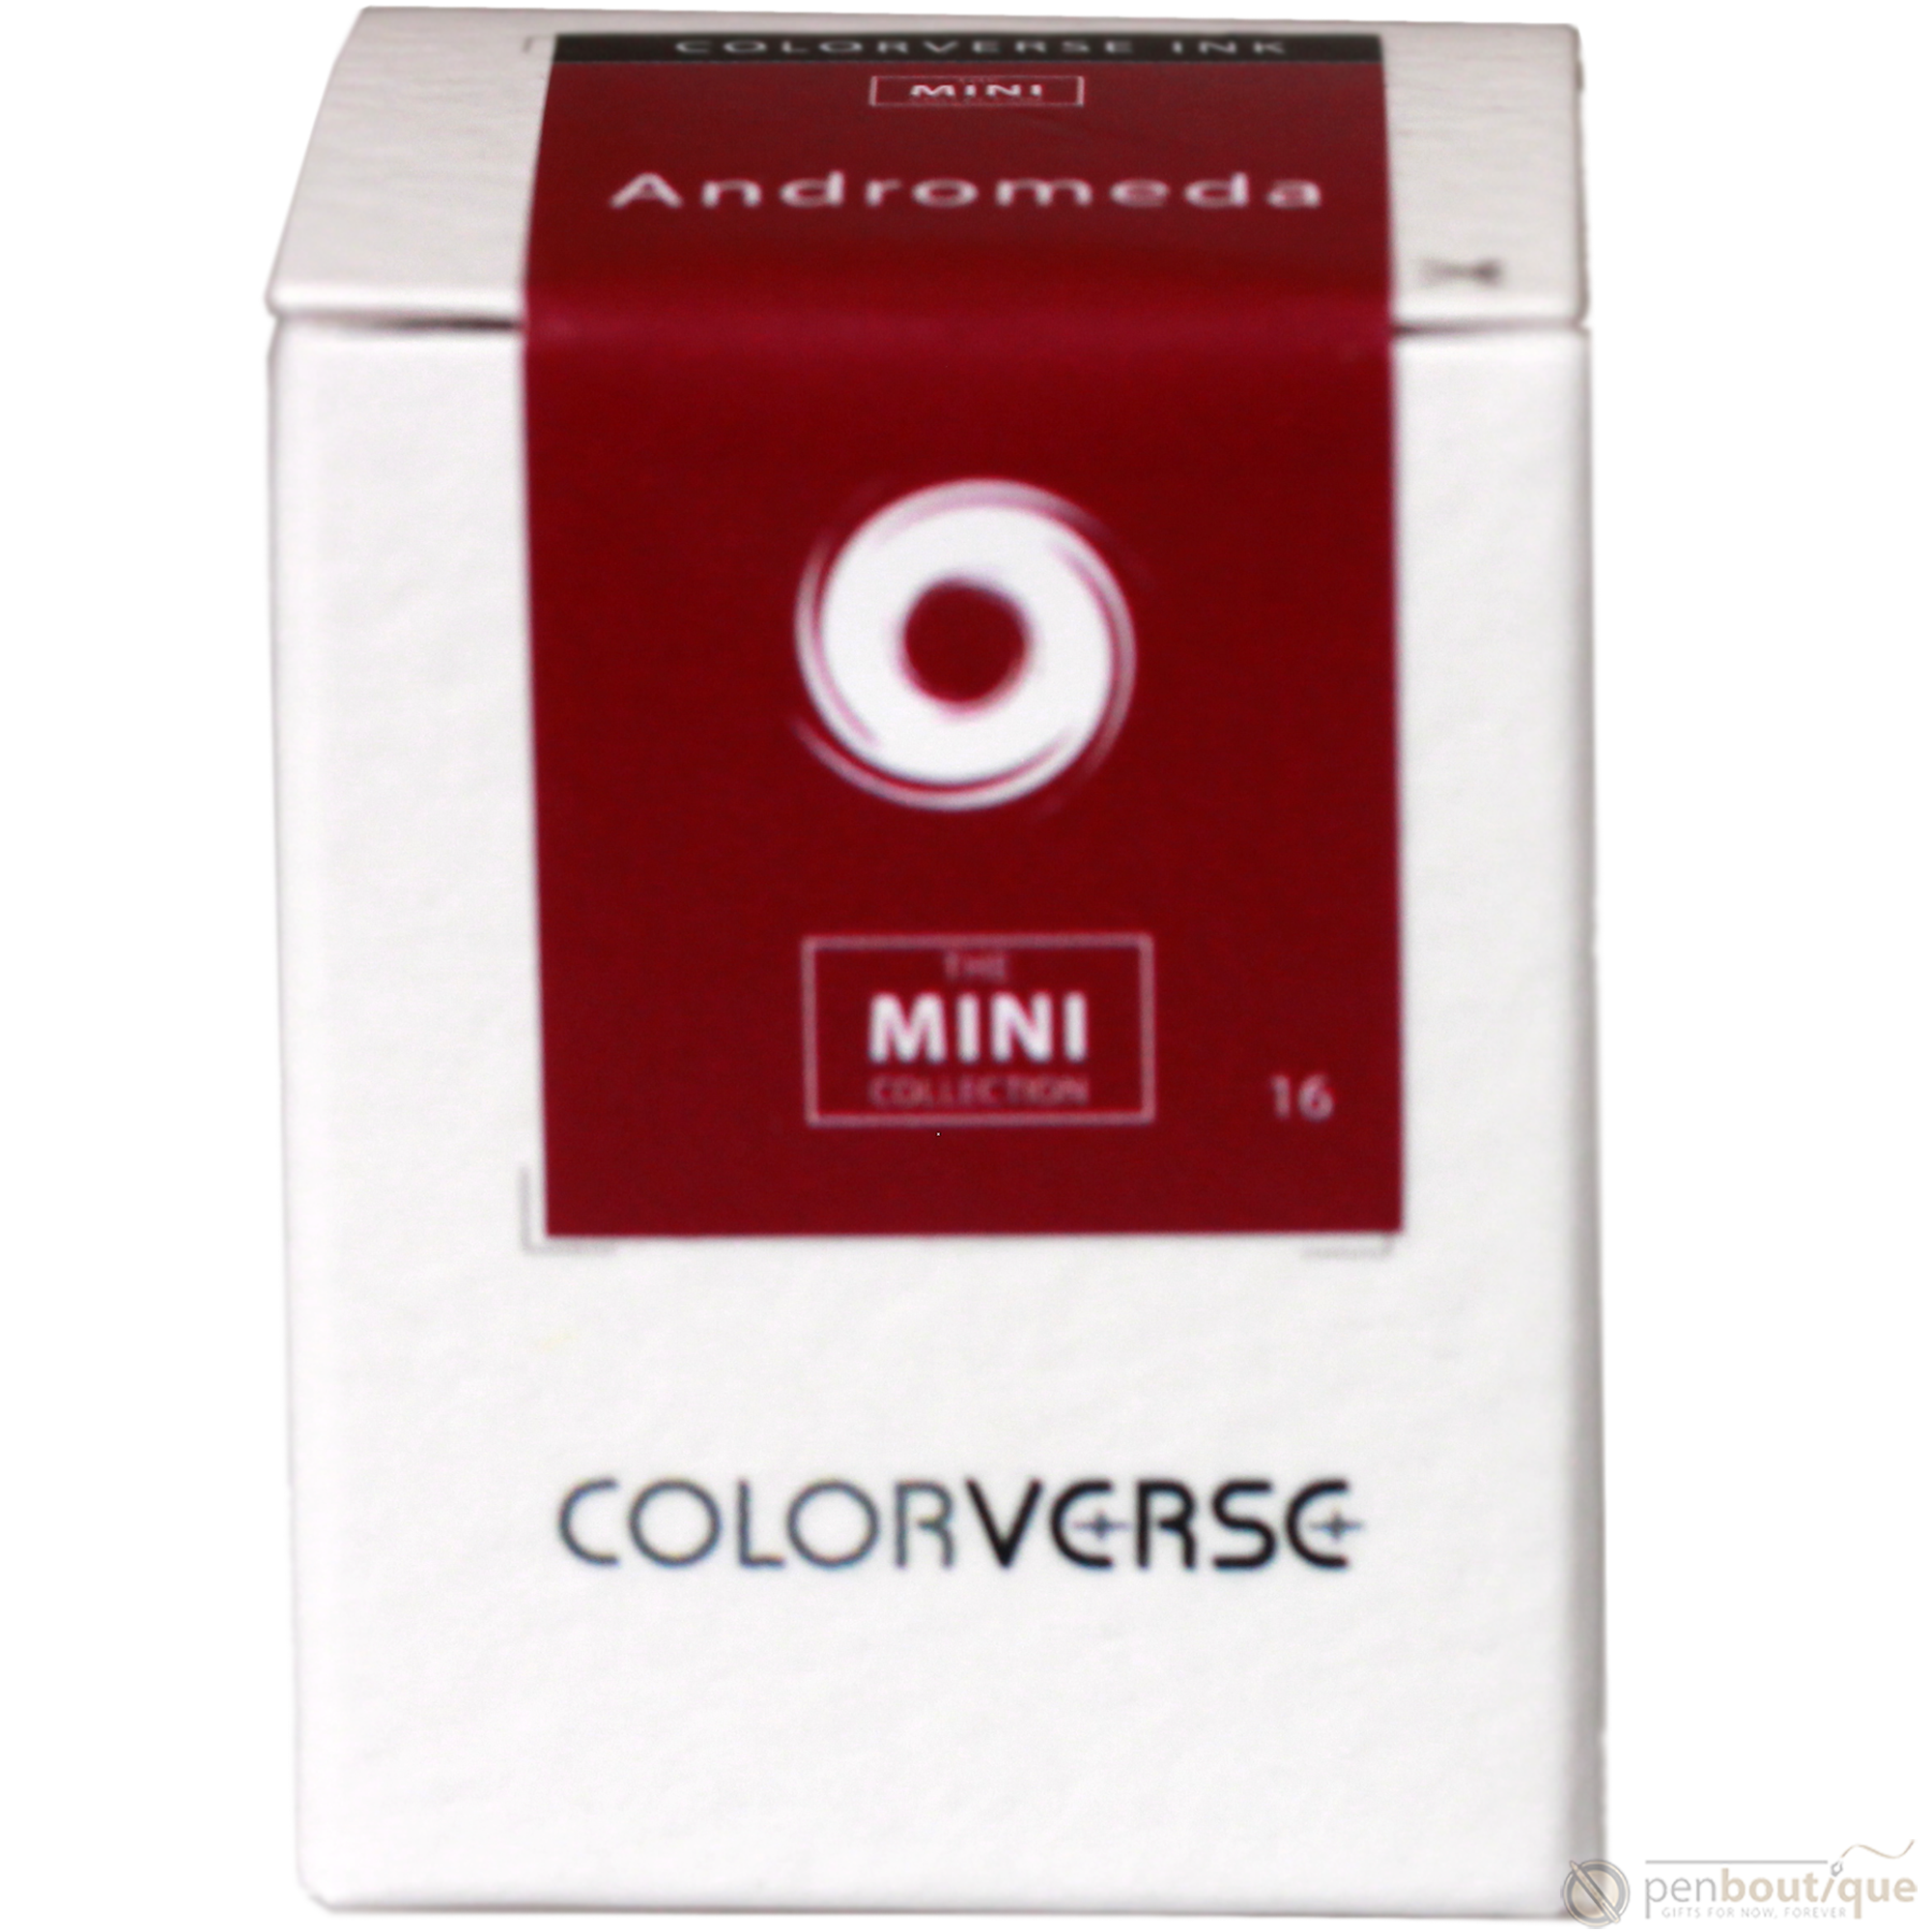 Colorverse Mini Ink - Astrophysics - Andromeda - 5ml-Pen Boutique Ltd